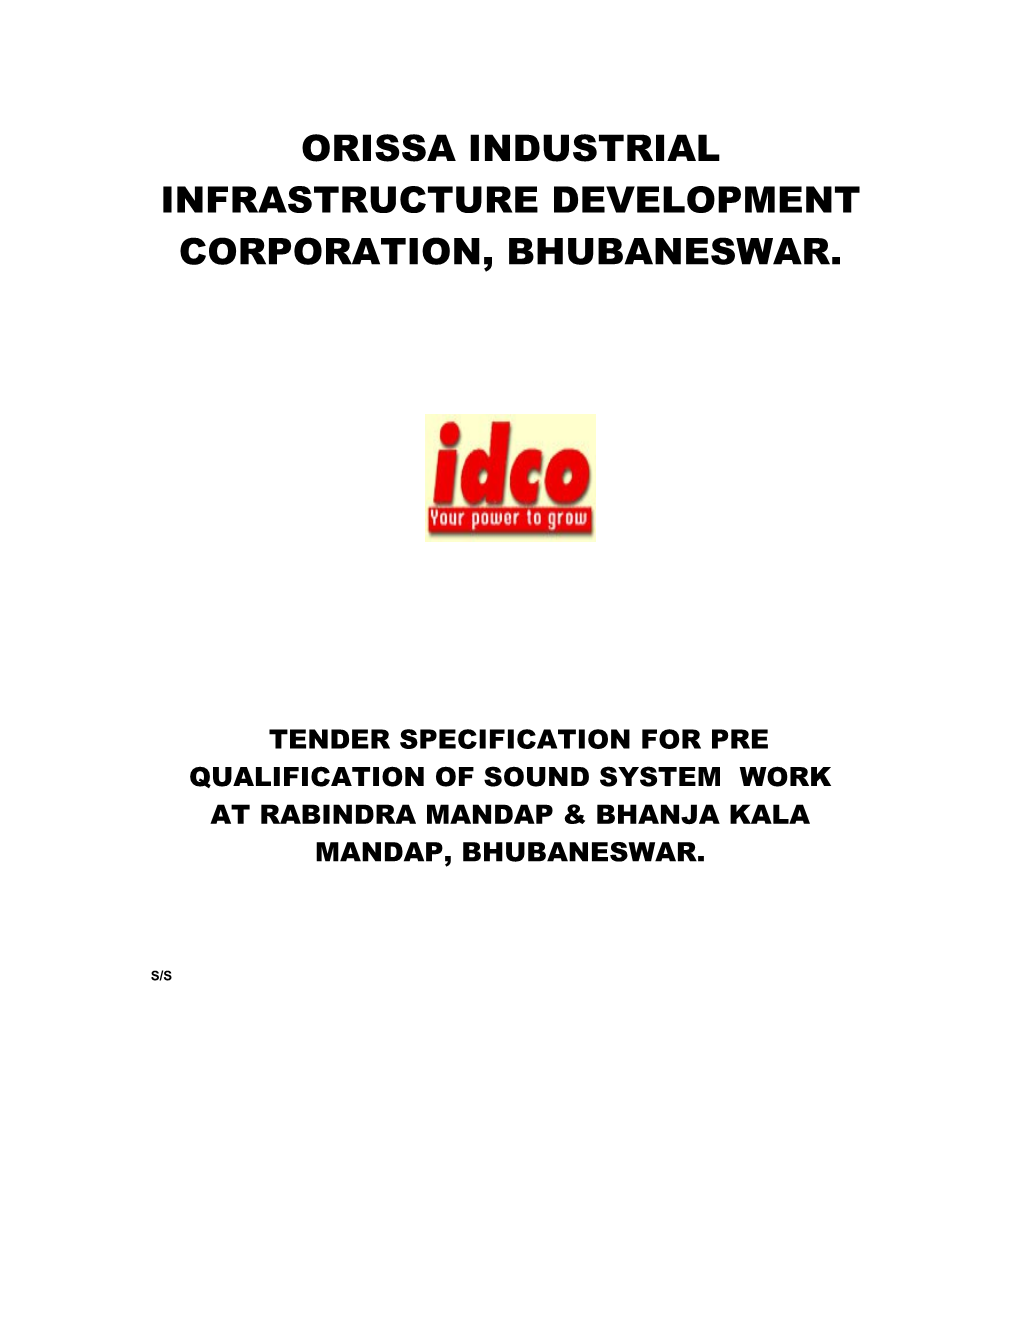 Orissa Industrial Infrastructure Development Corporation, Bhubaneswar